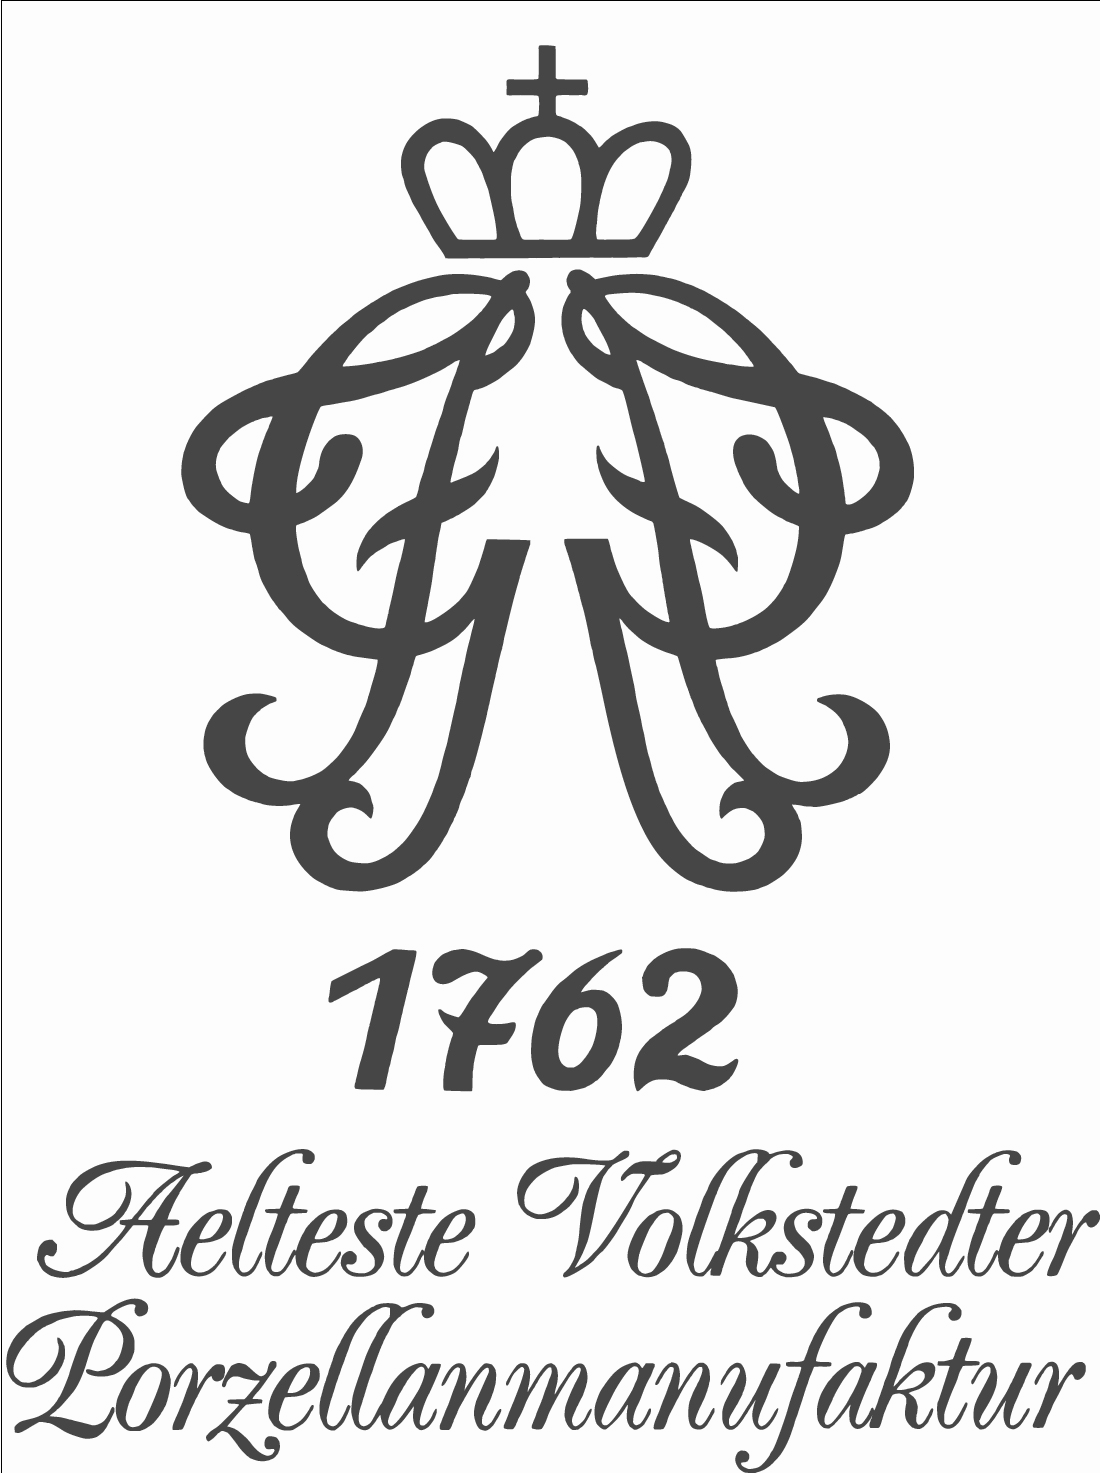 Aelteste_Volkstedt_Logo_1762